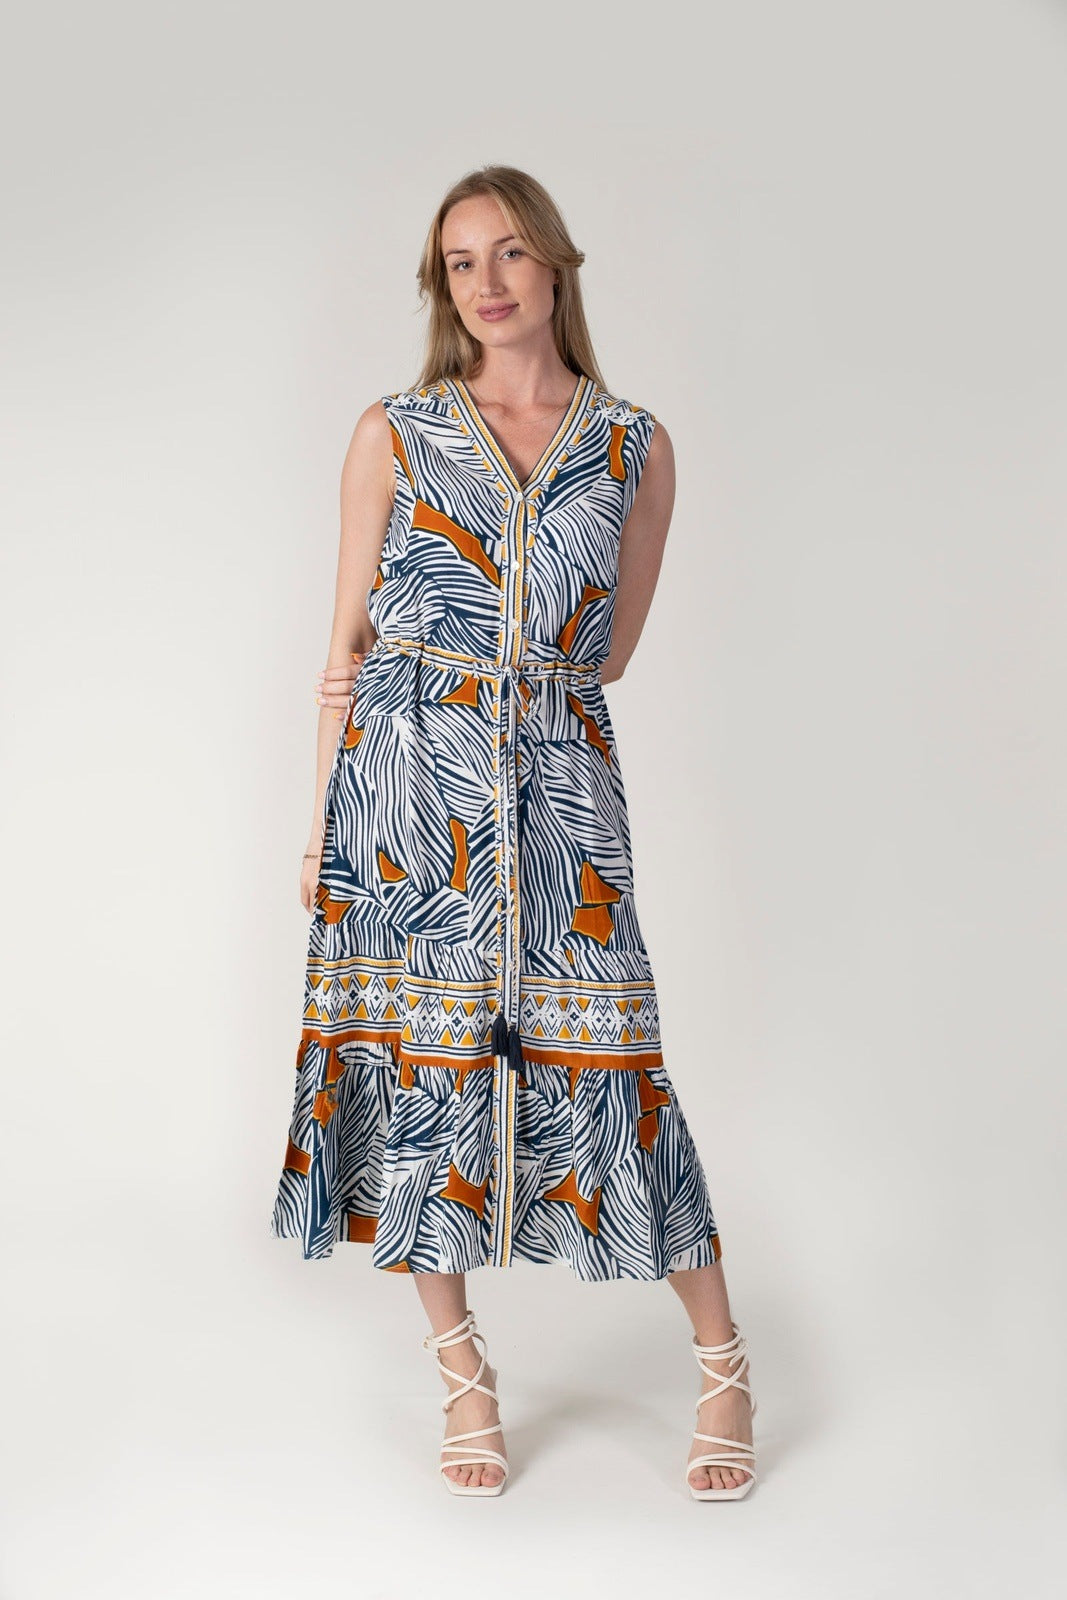 Tea Lane Bold Abstract Dress - Navy &amp; Orange 2 Shaws Department Stores